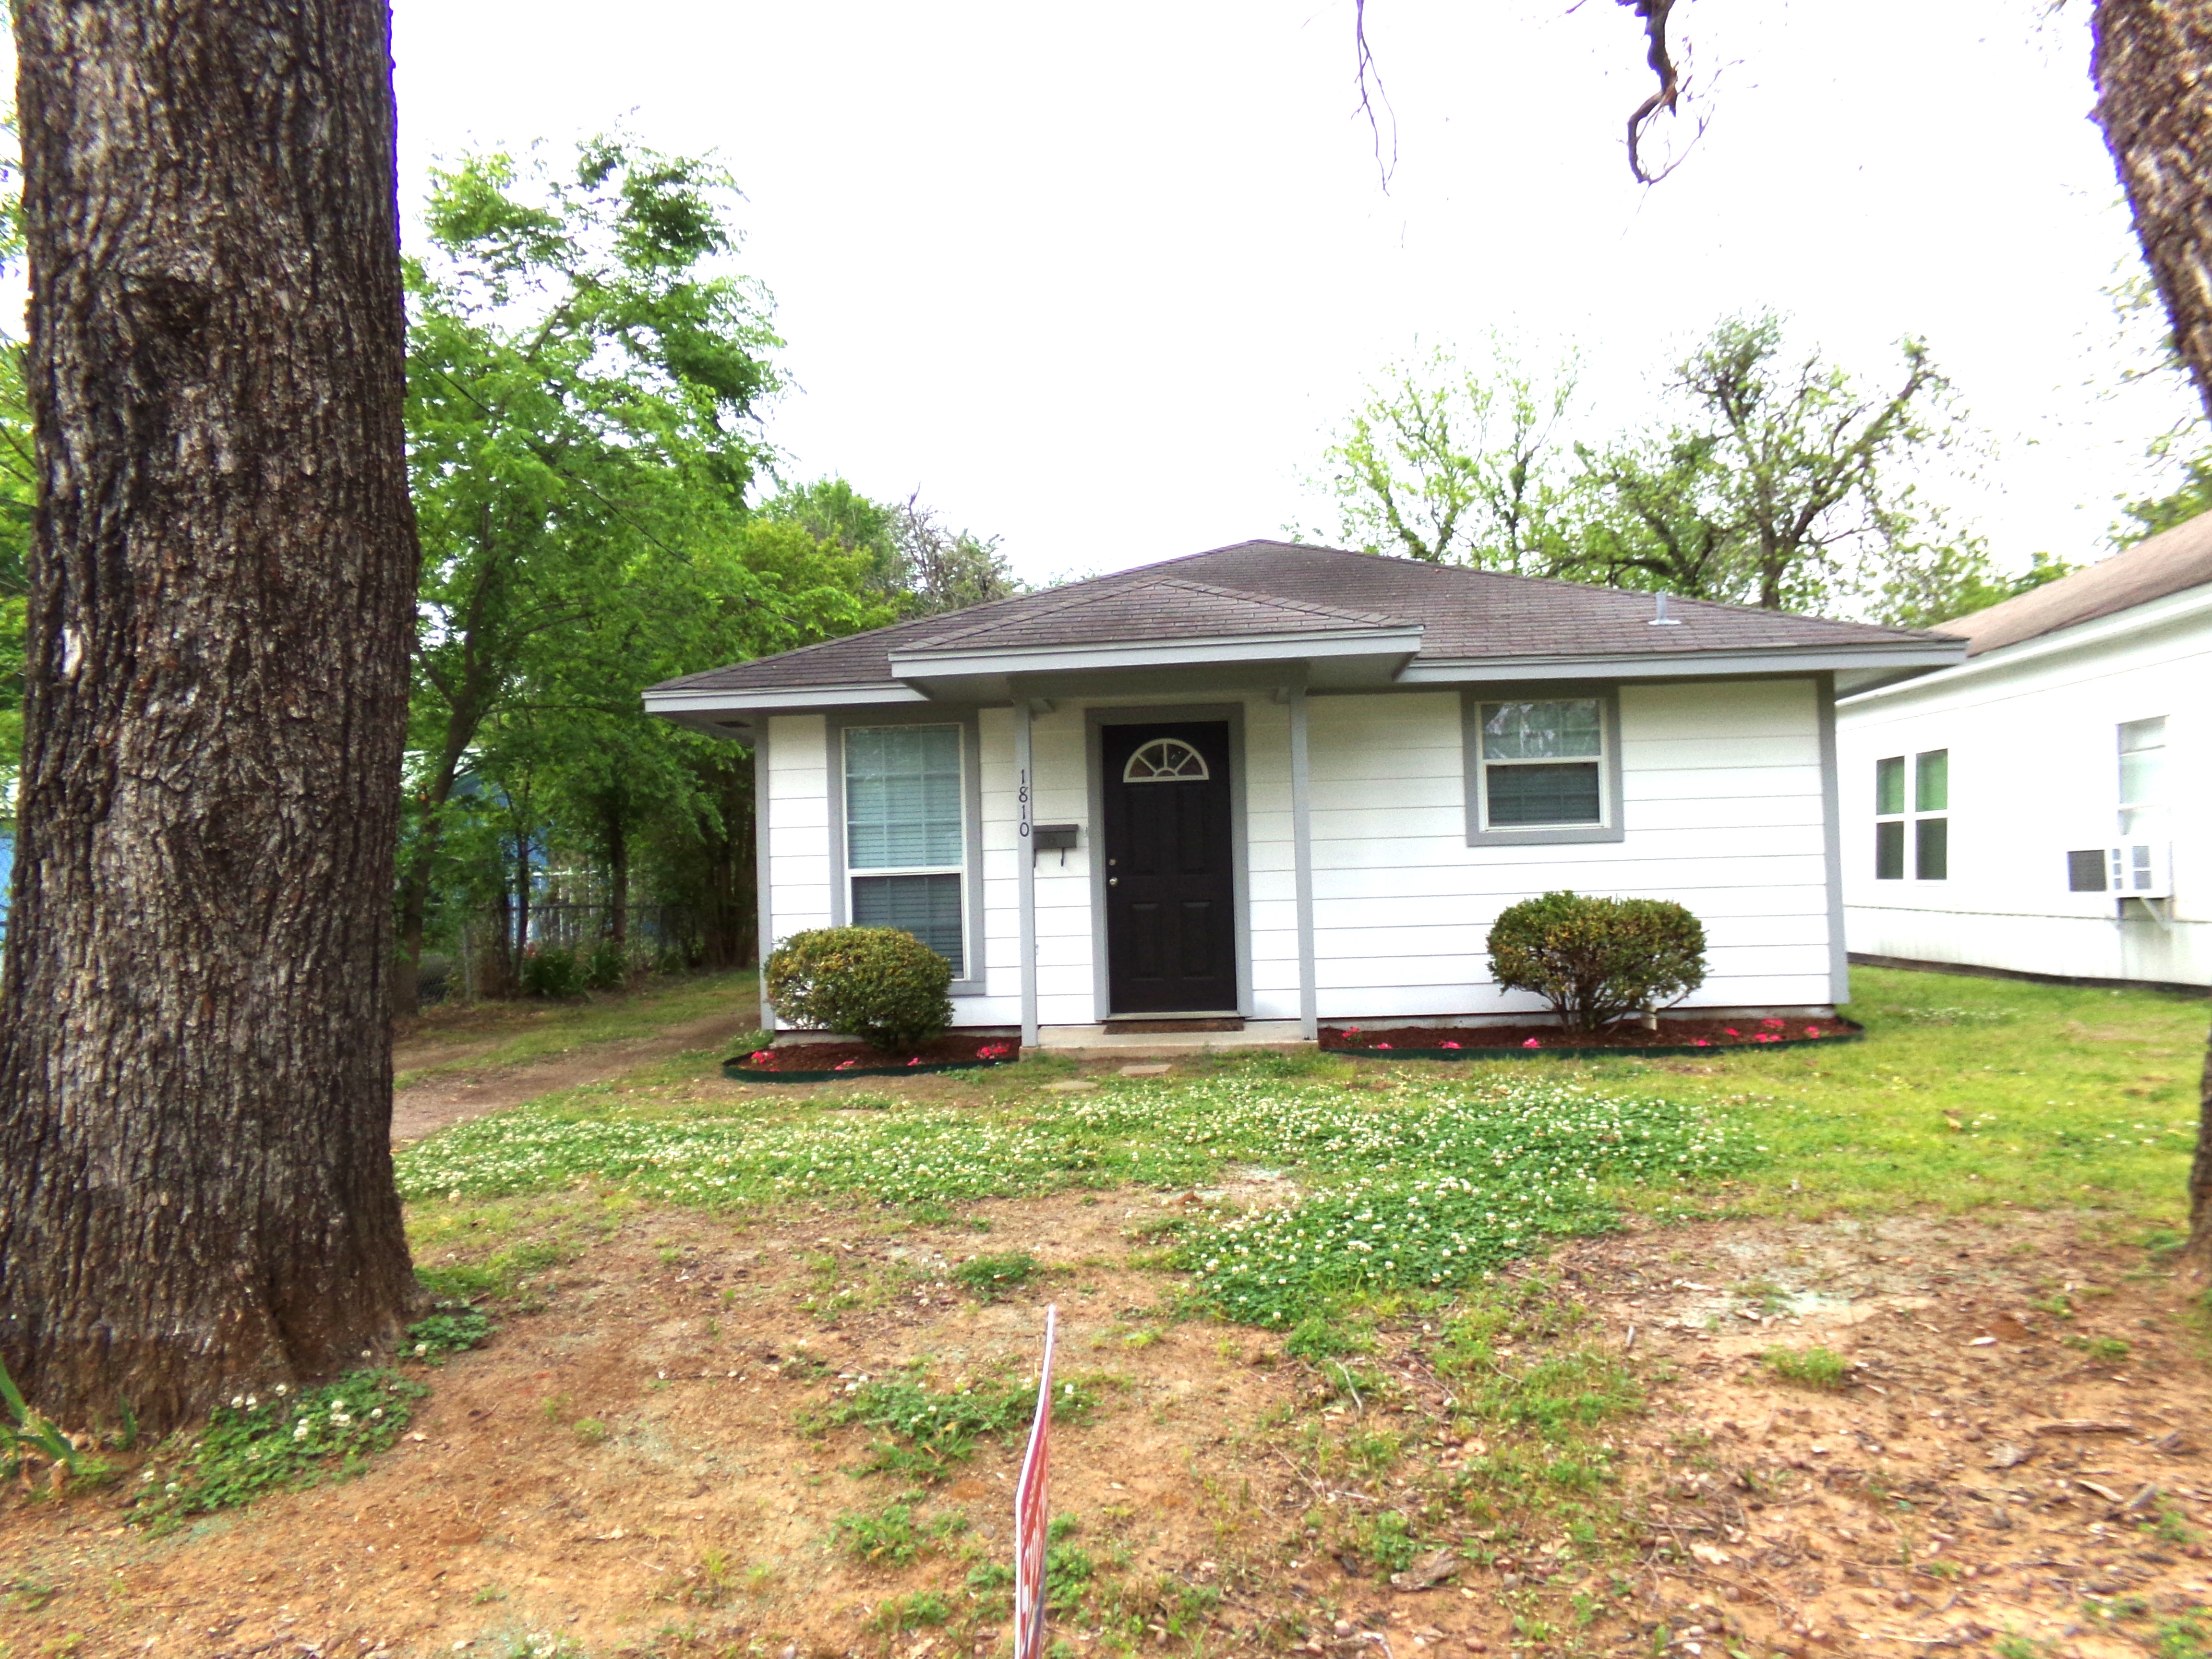 Updated Home For Sale in Paris TX, NE Texas, Lamar County TX